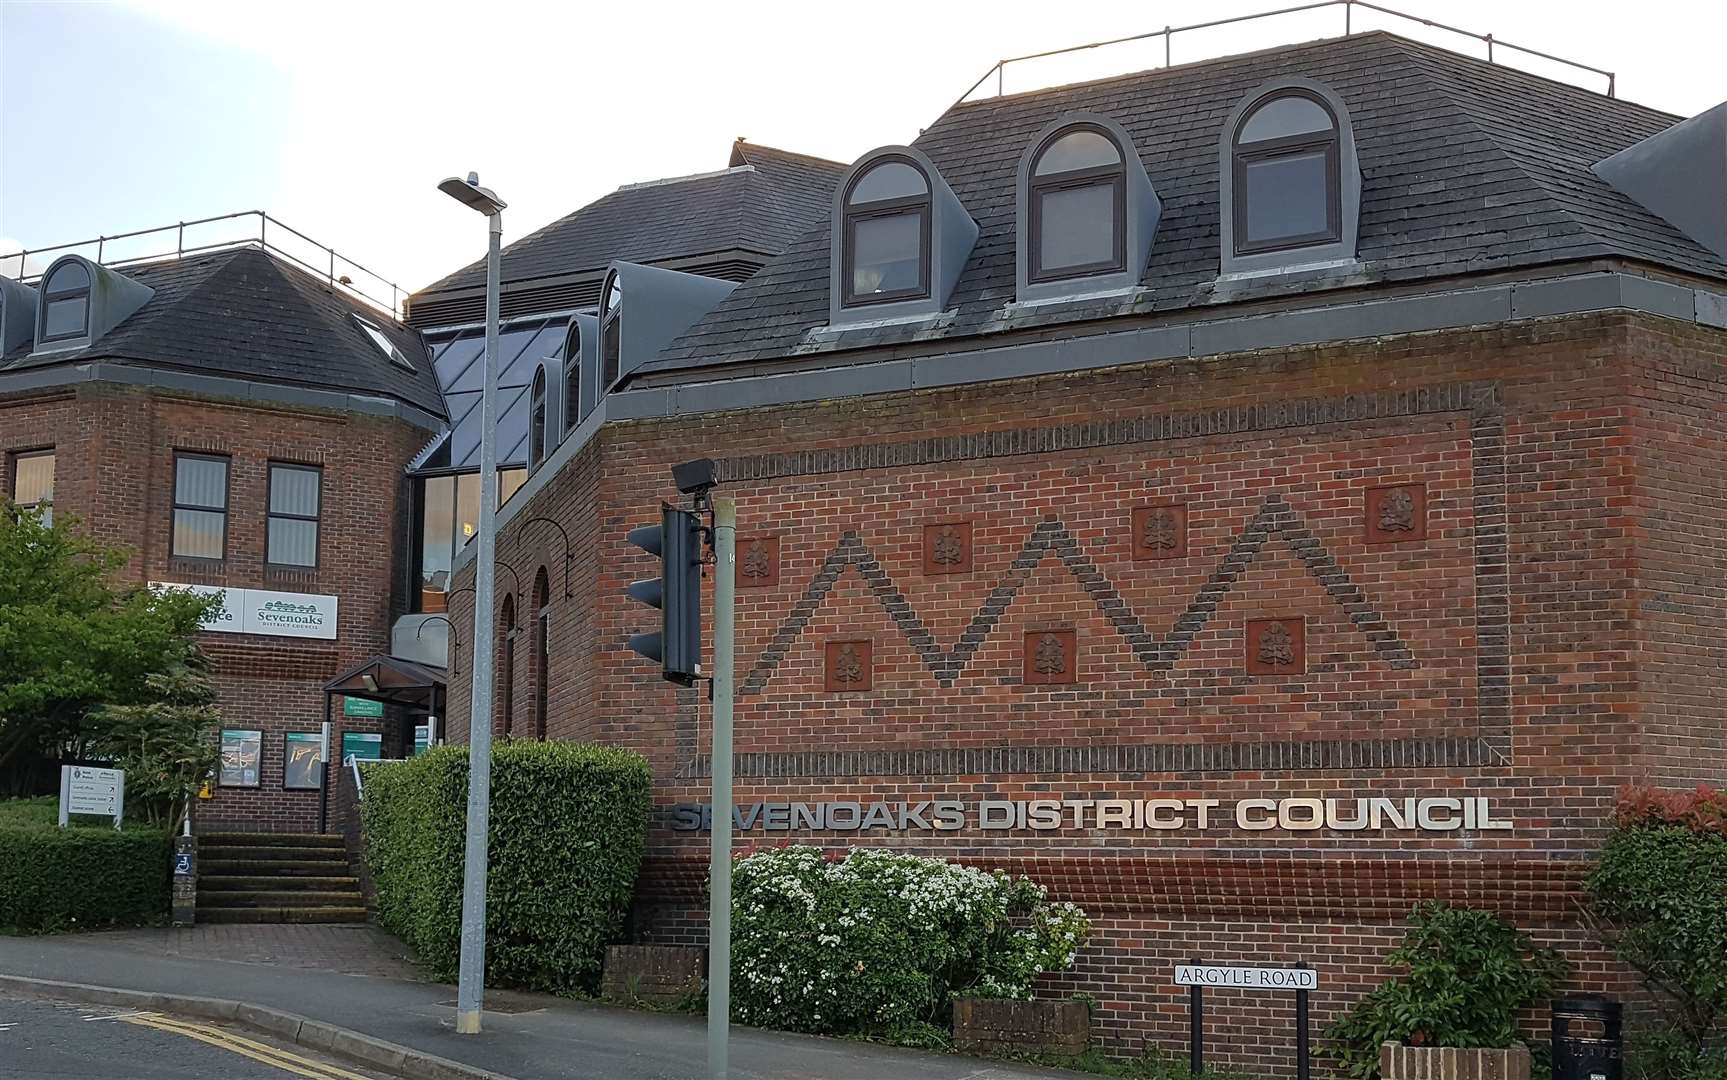 The headquarters of Sevenoaks District Council